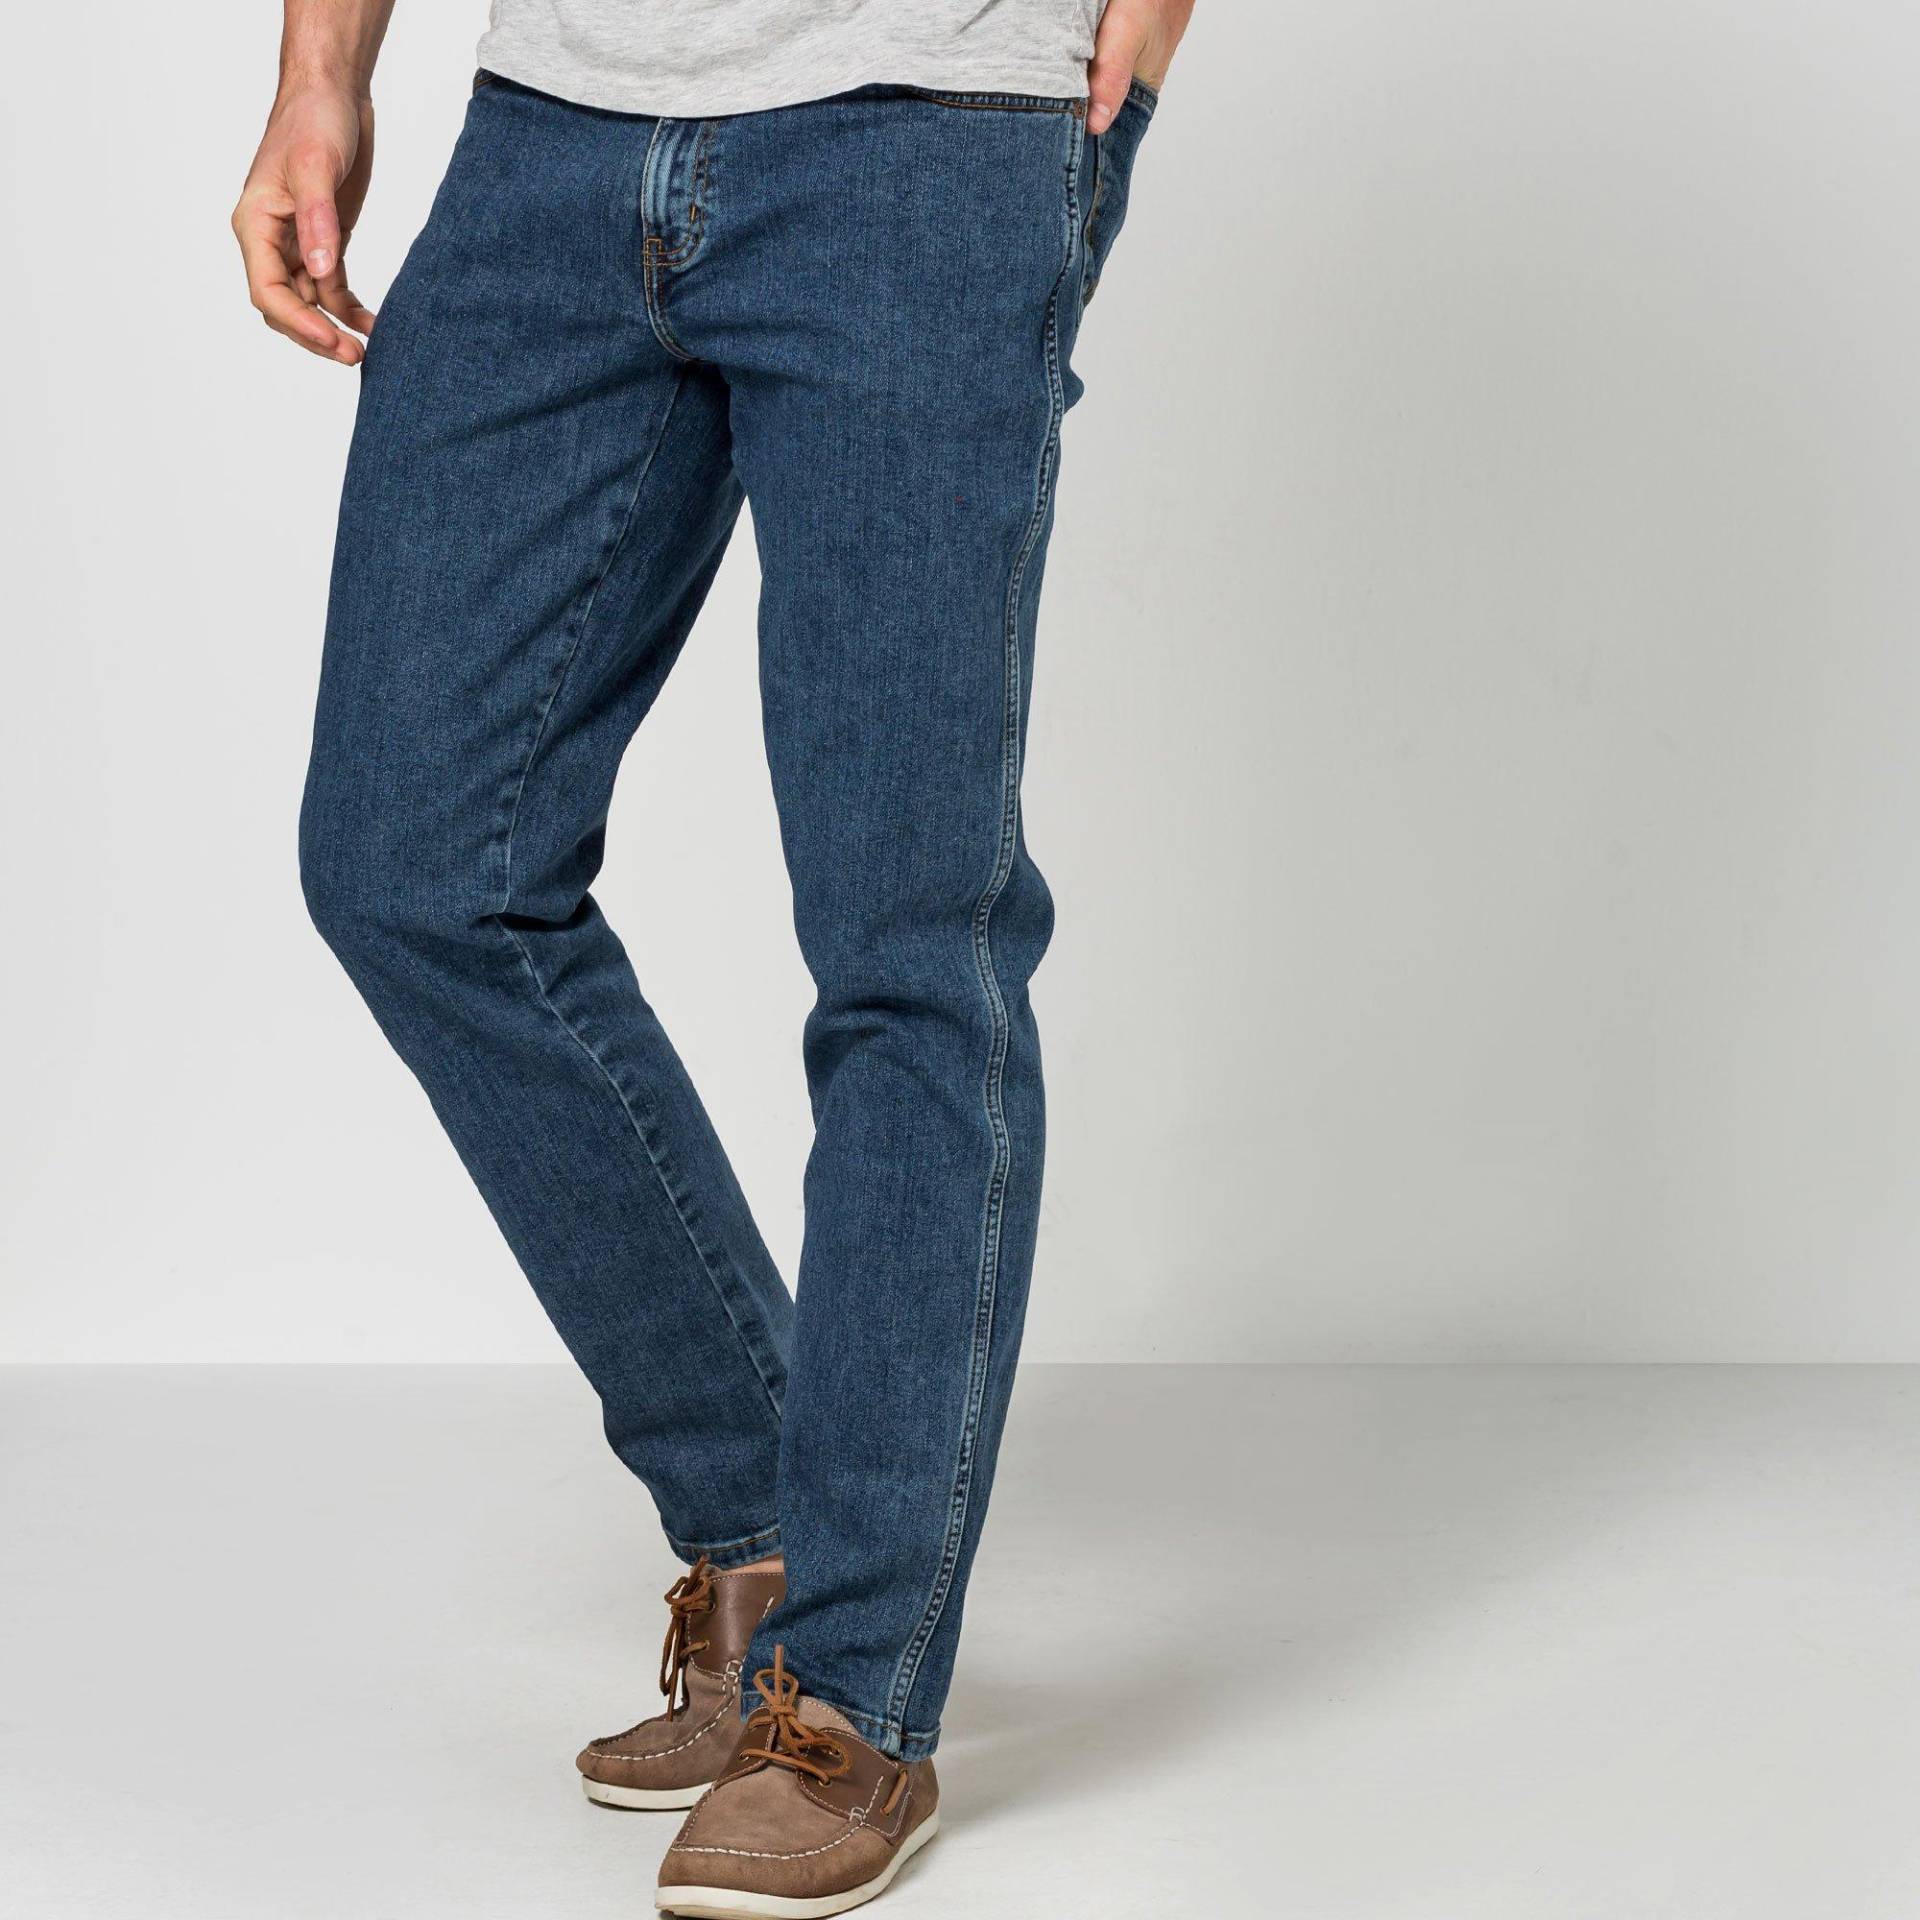 Jeans Straight Leg Texas Herren Blau Denim L30/W30 von Wrangler